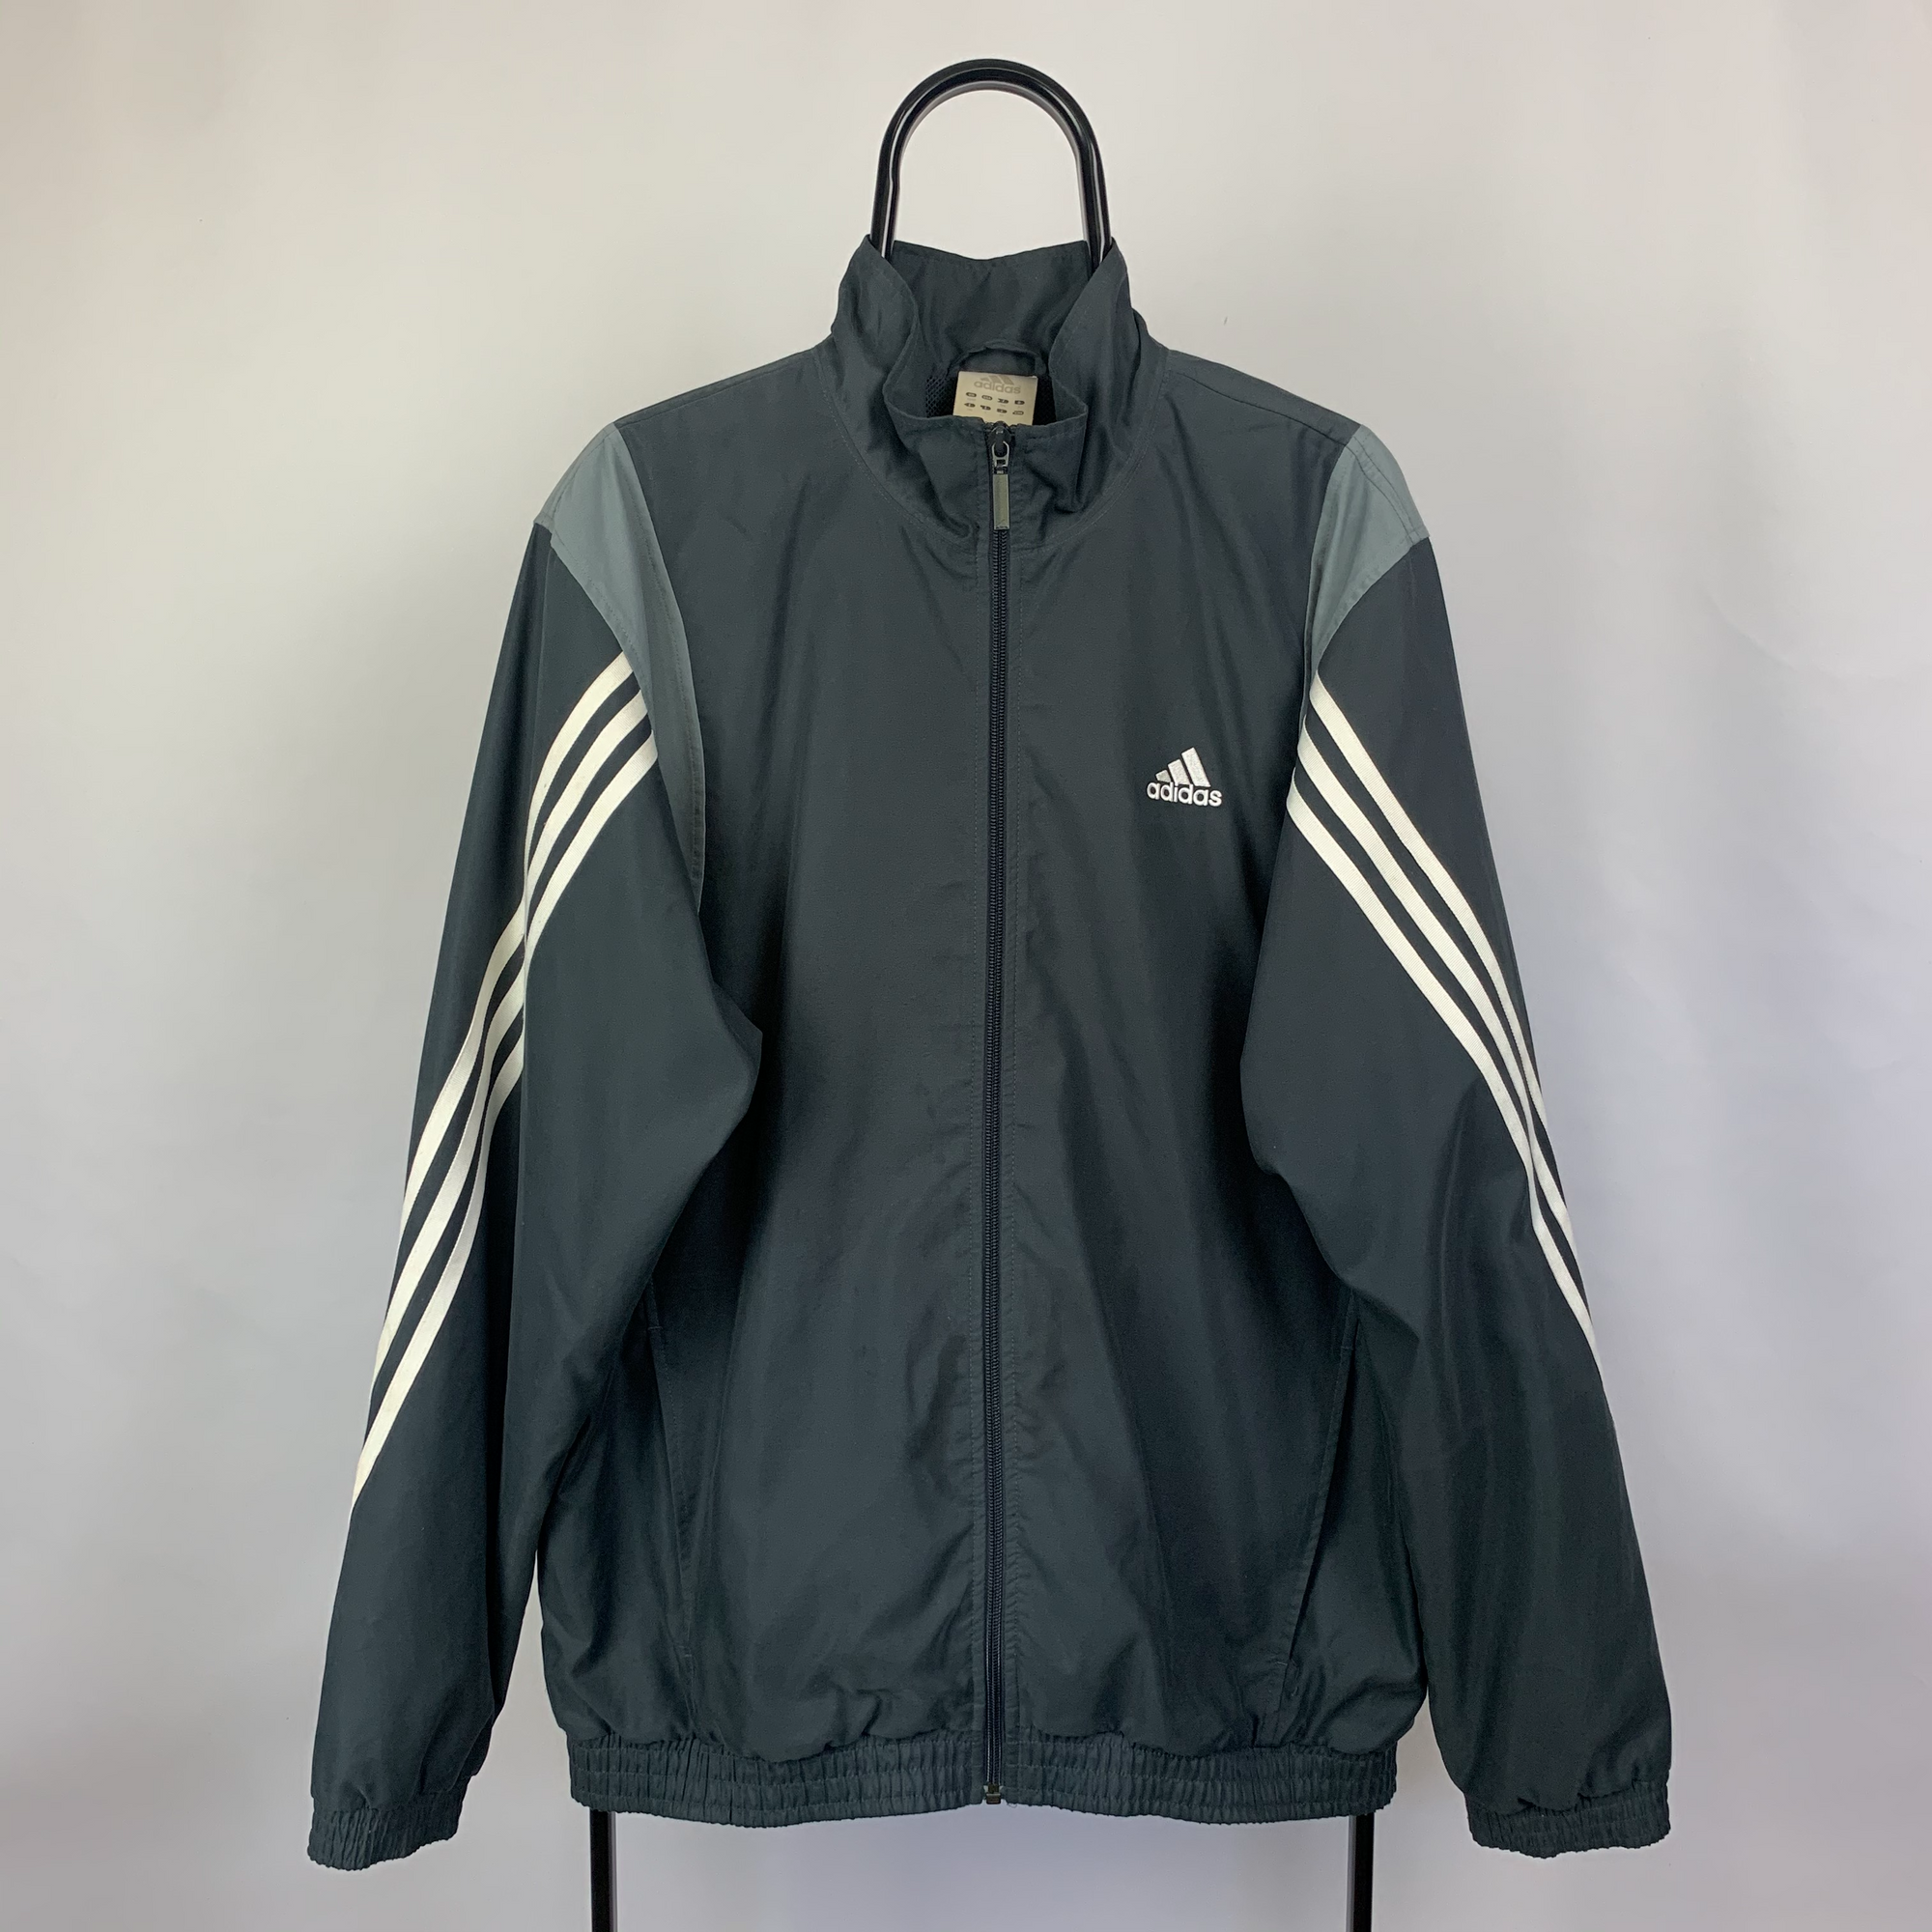 Vintage Adidas Track Jacket in Navy - Men's Large/Women's XL